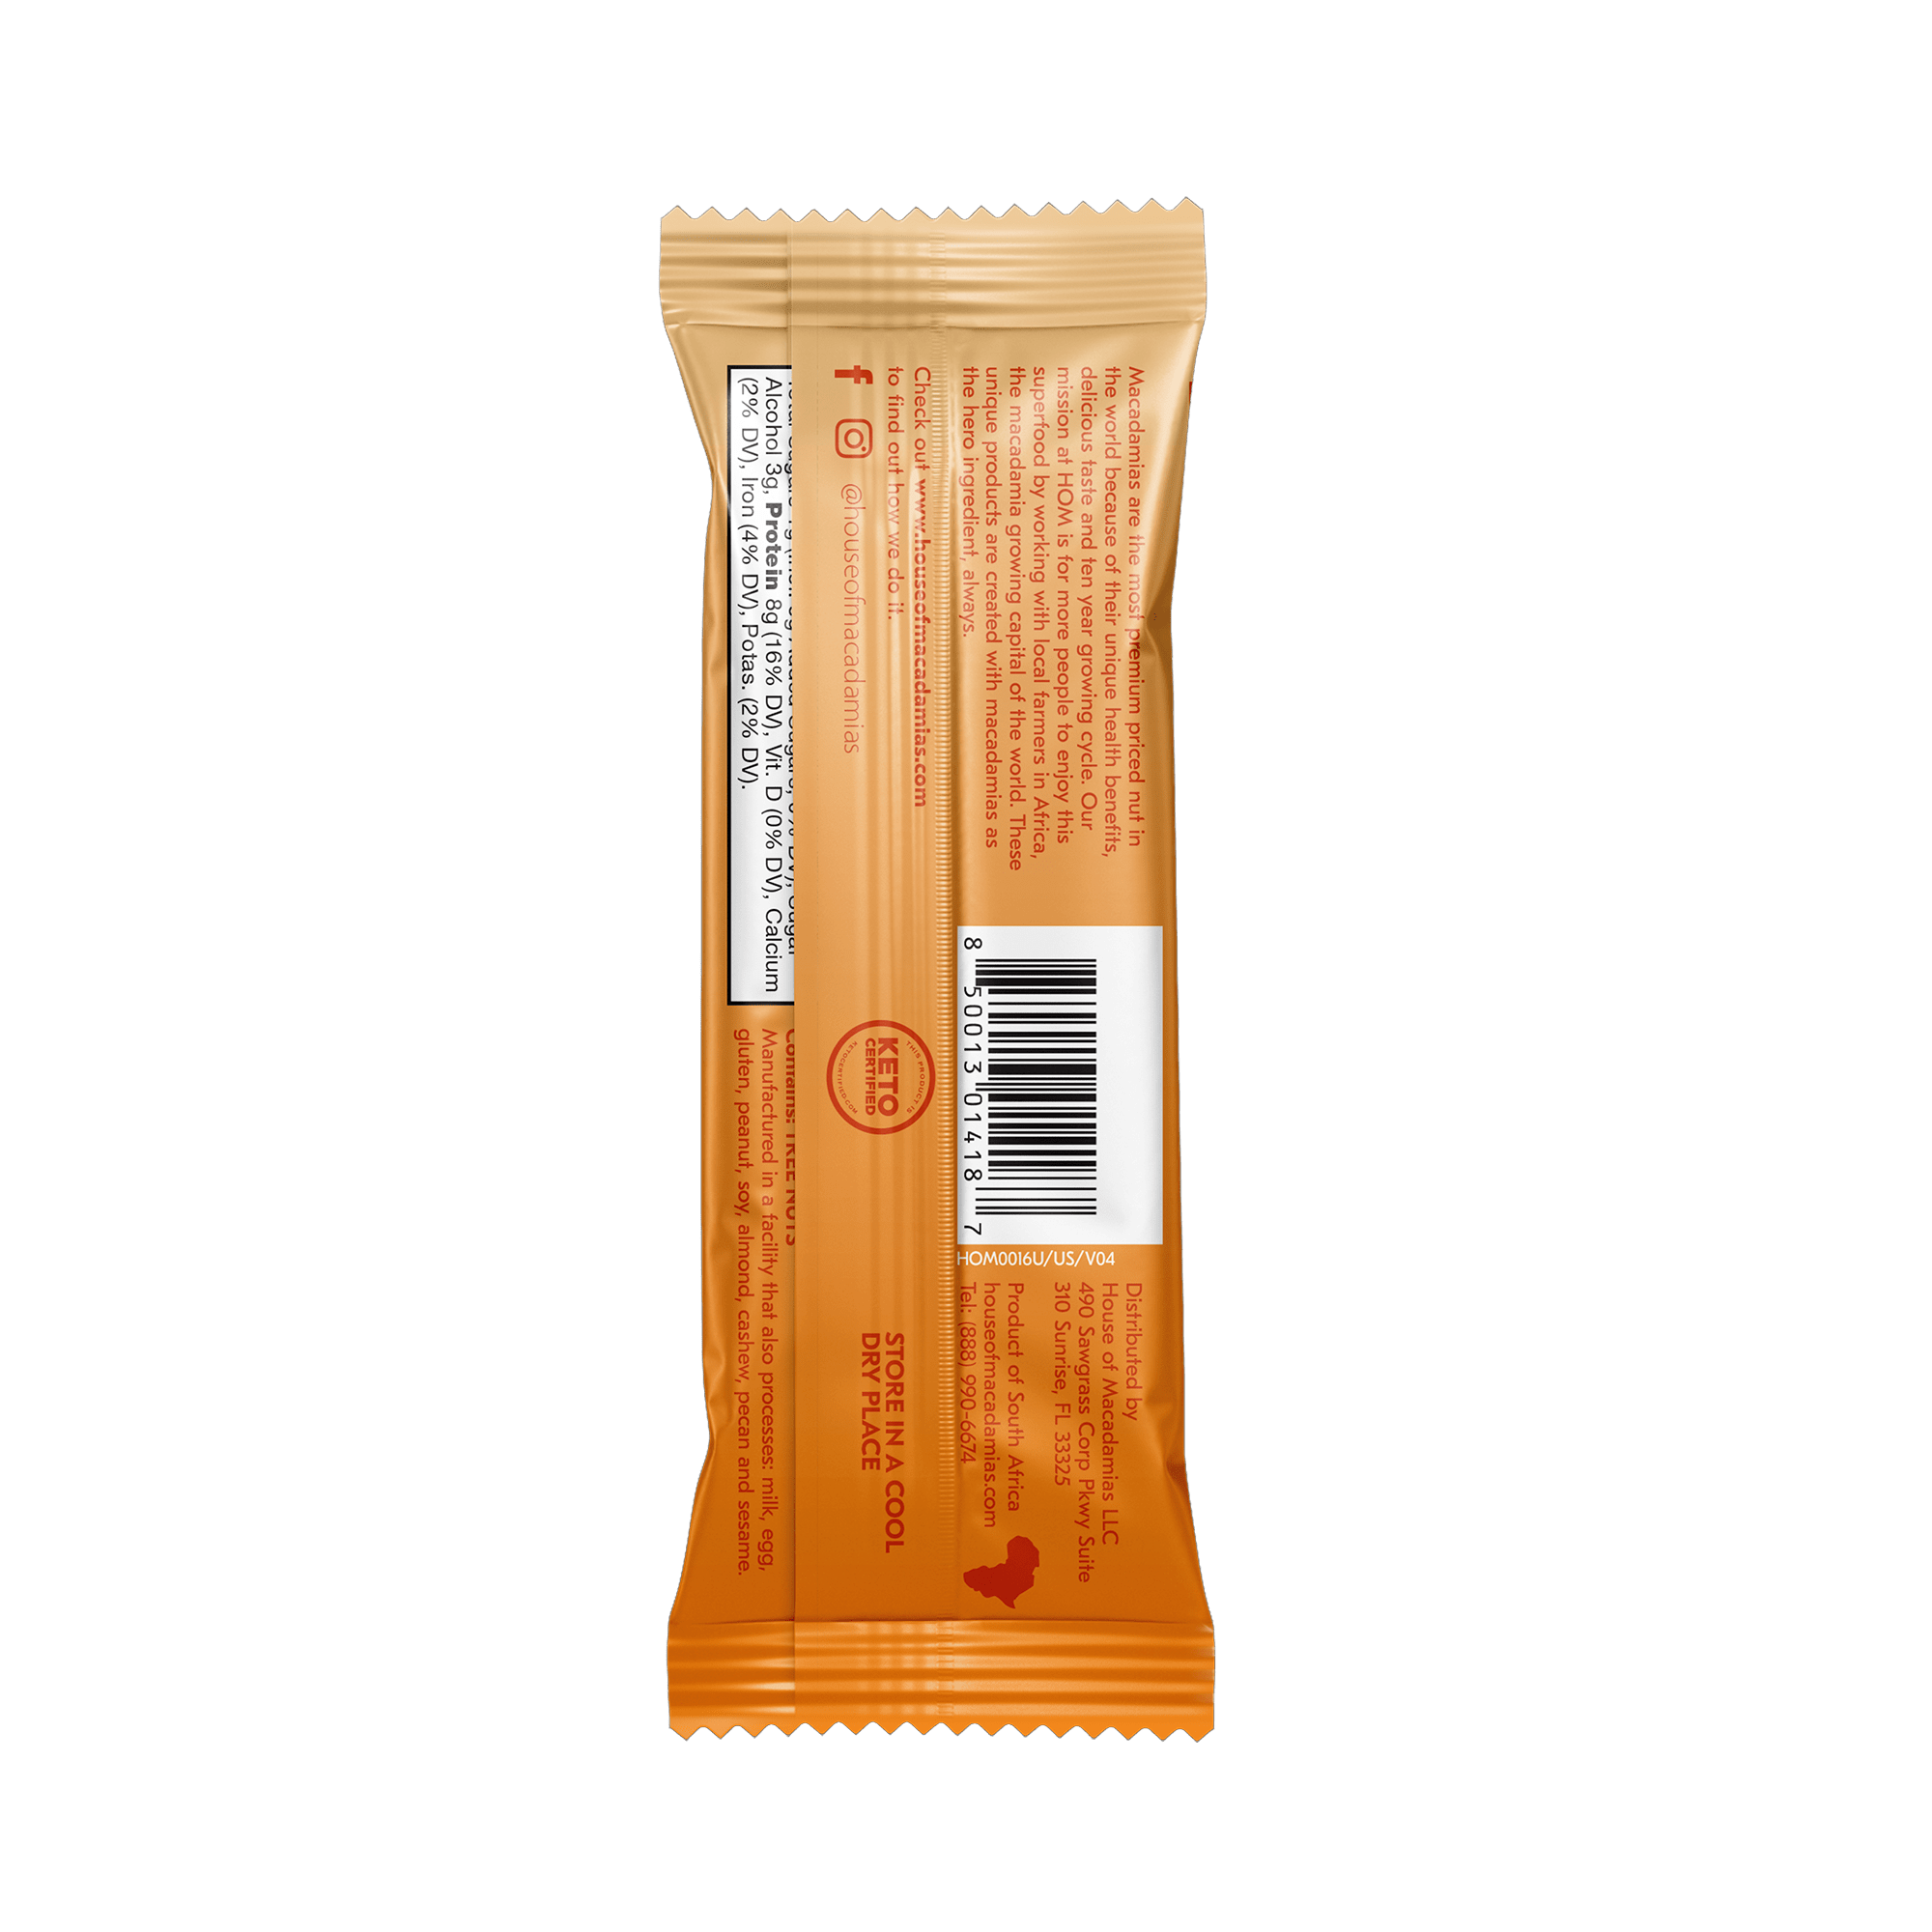 Salted Caramel Macadamia Protein Bars (12 Bars) - House of Macadamias - quick easy snacks